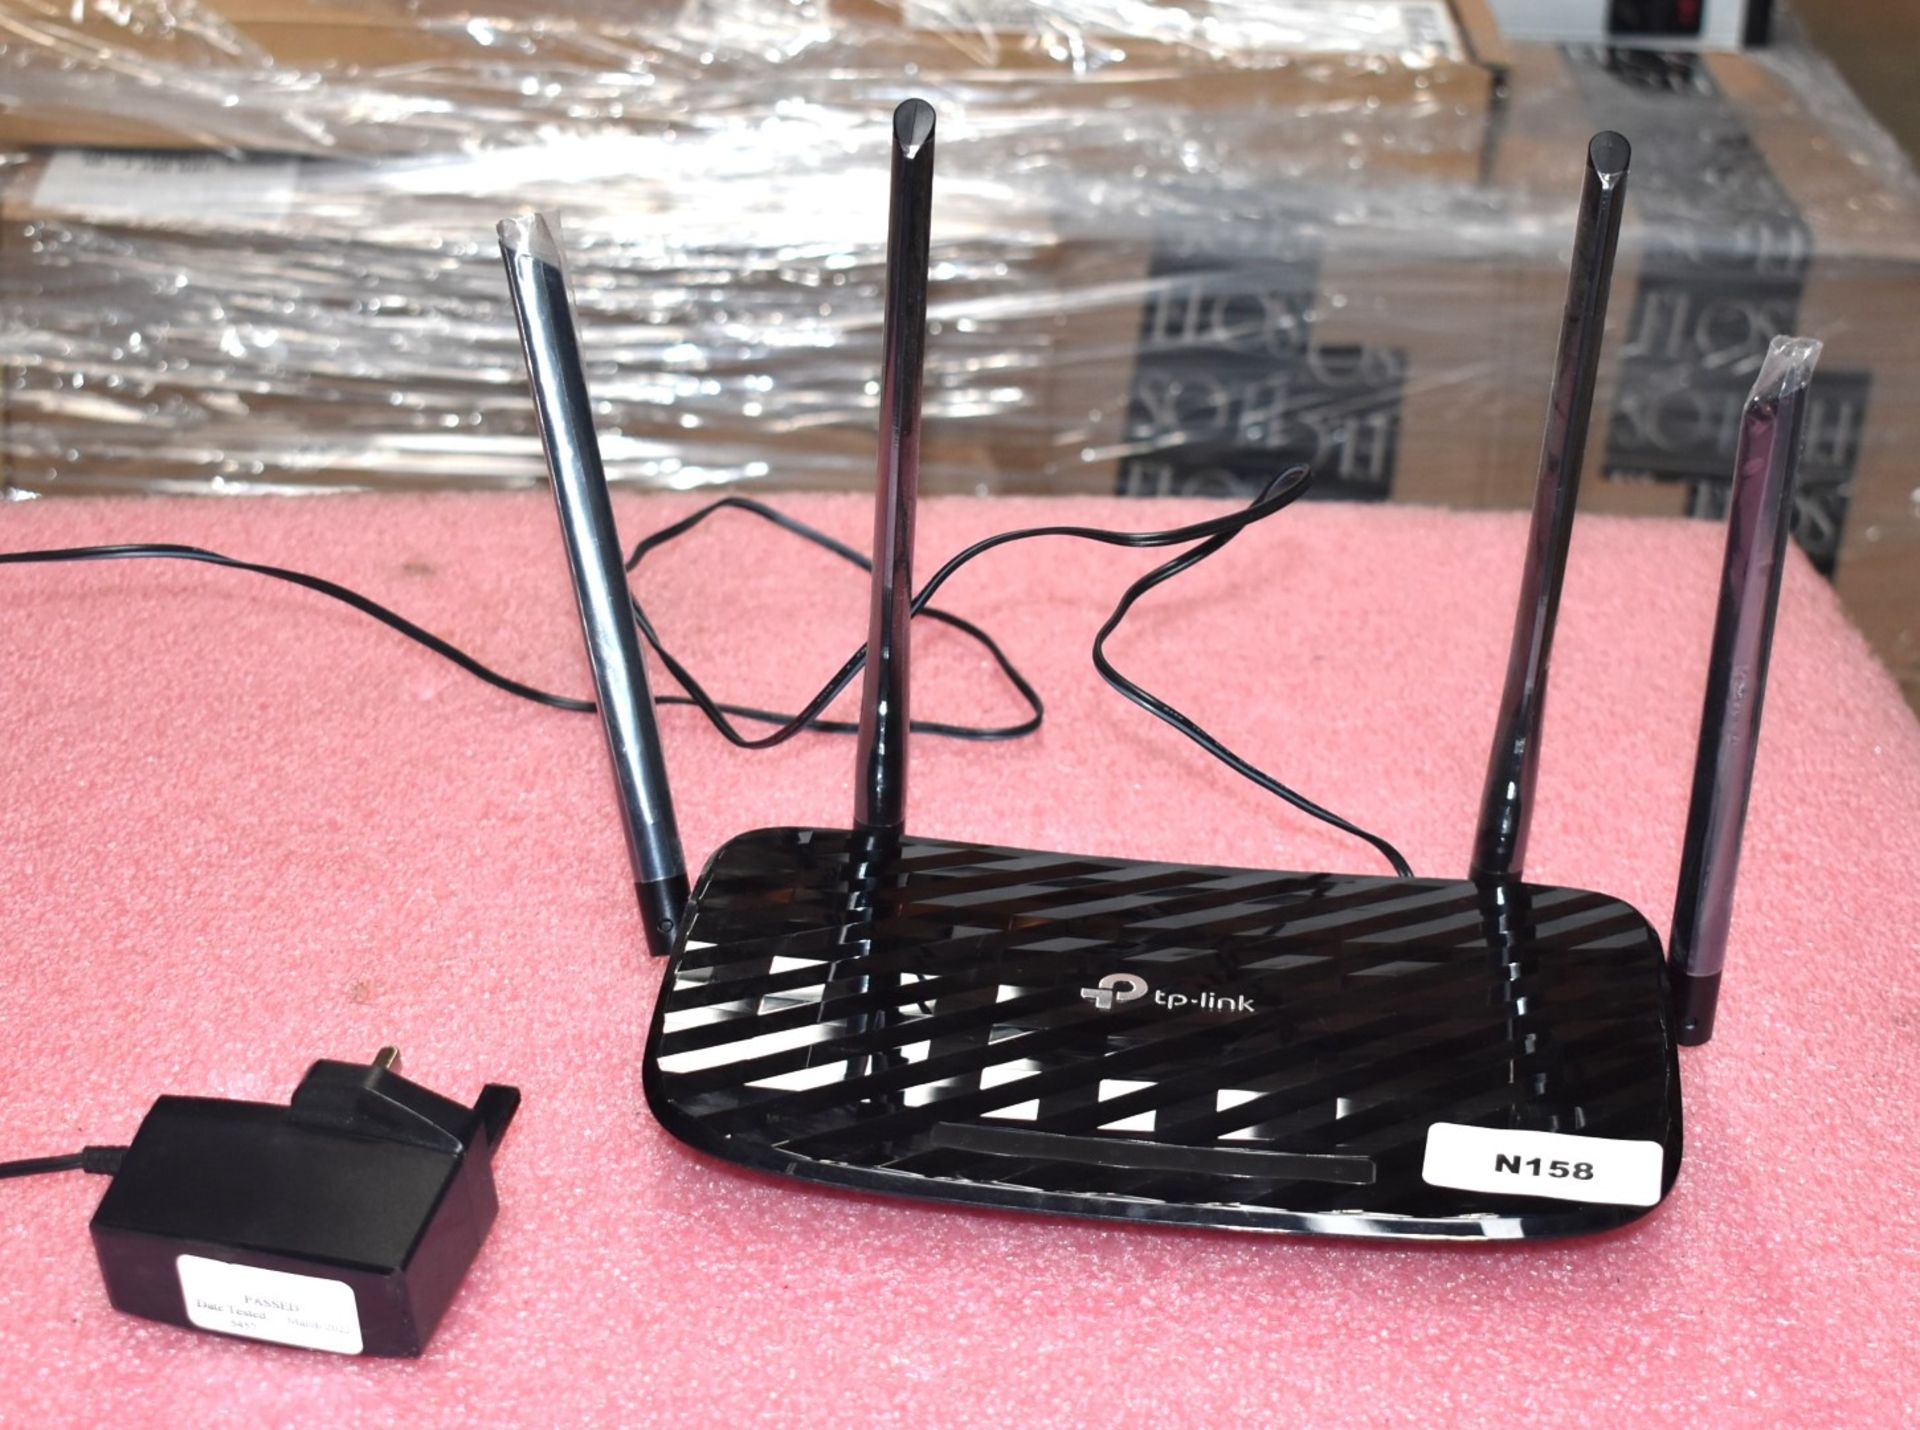 1 x TP Link AC1200 Wireless MU-MIMO Gigabit Router - Model Acher C6 - Includes Power Adaptor